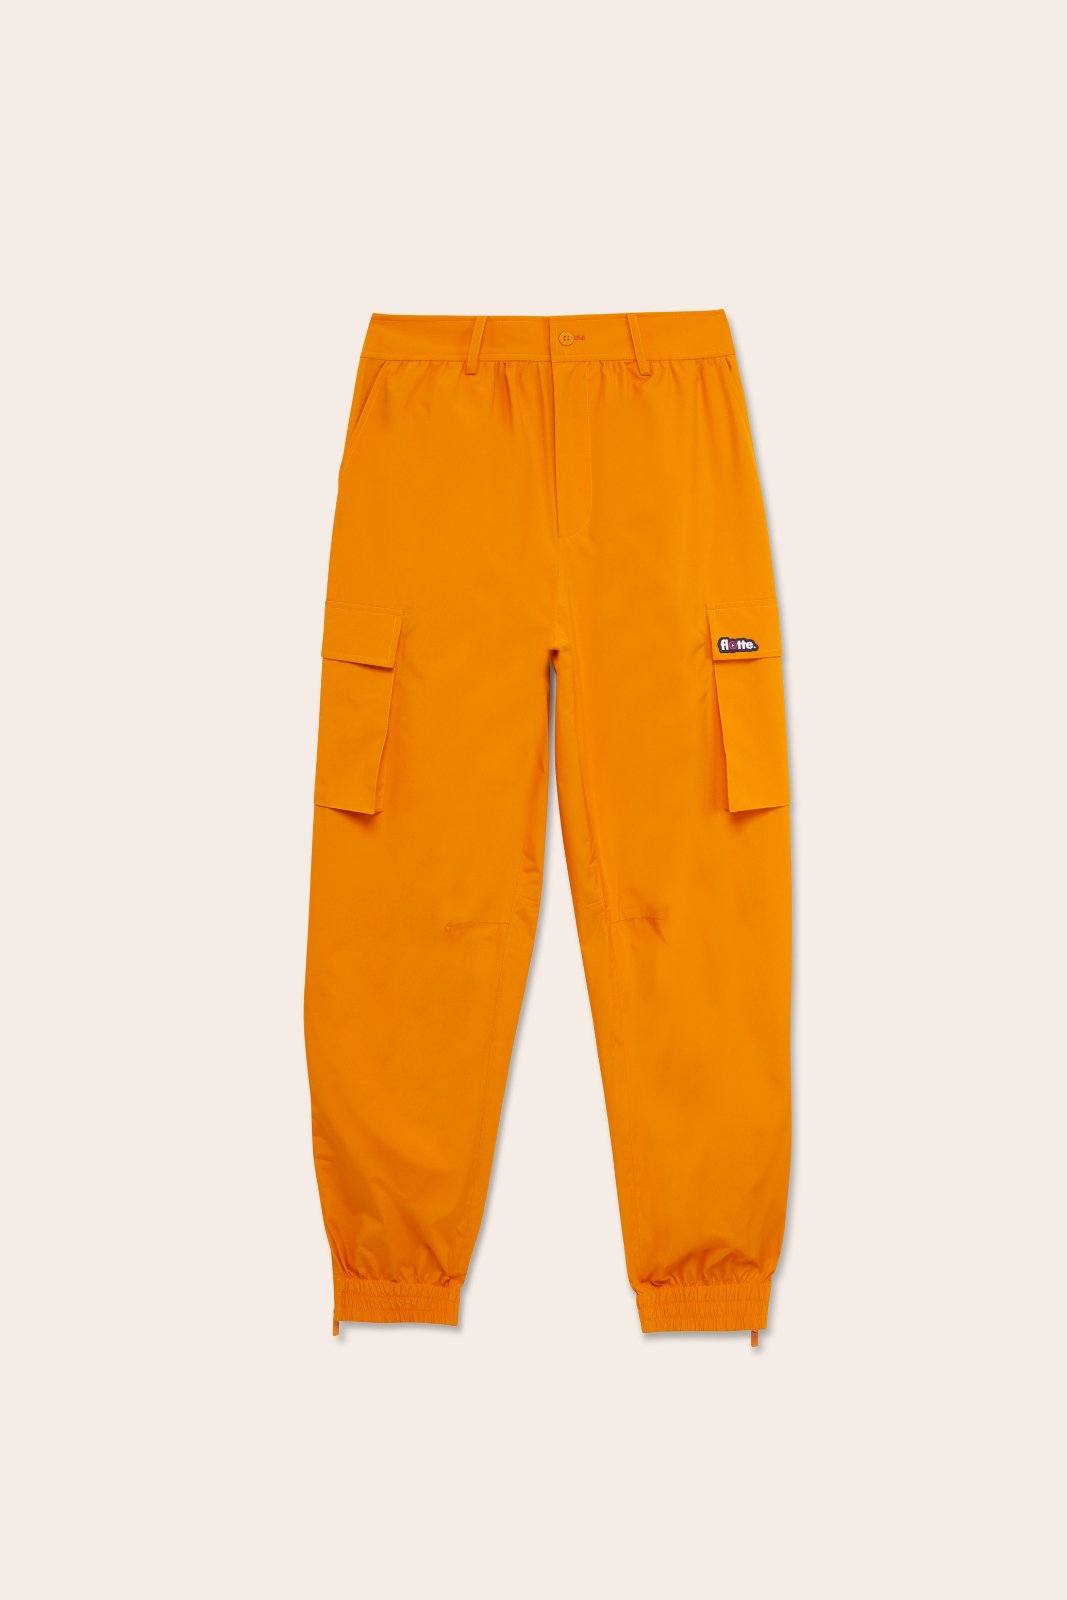 Gambetta multi-pocket waterproof cargo pants #couleur_abricot